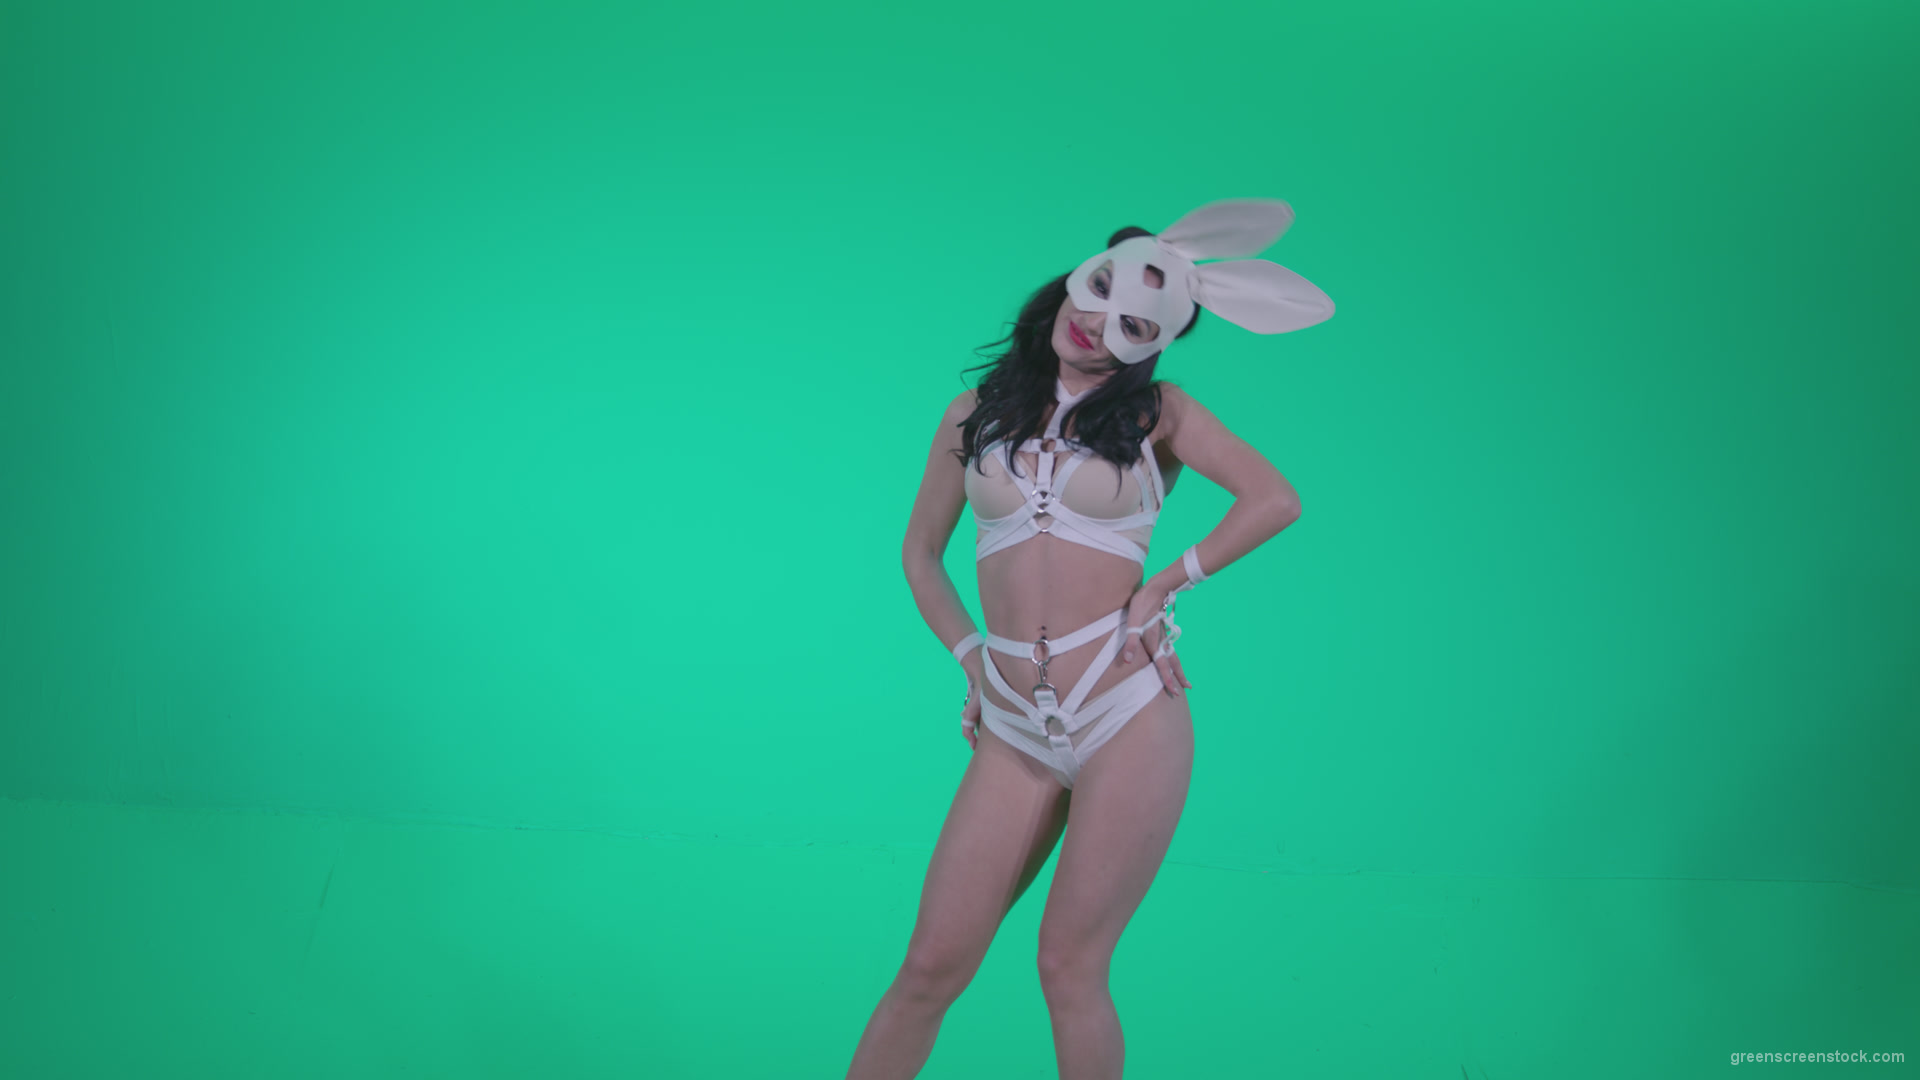 Go-go-Dancer-White-Rabbit-m11-Green-Screen-Video-Footage_005 Green Screen Stock